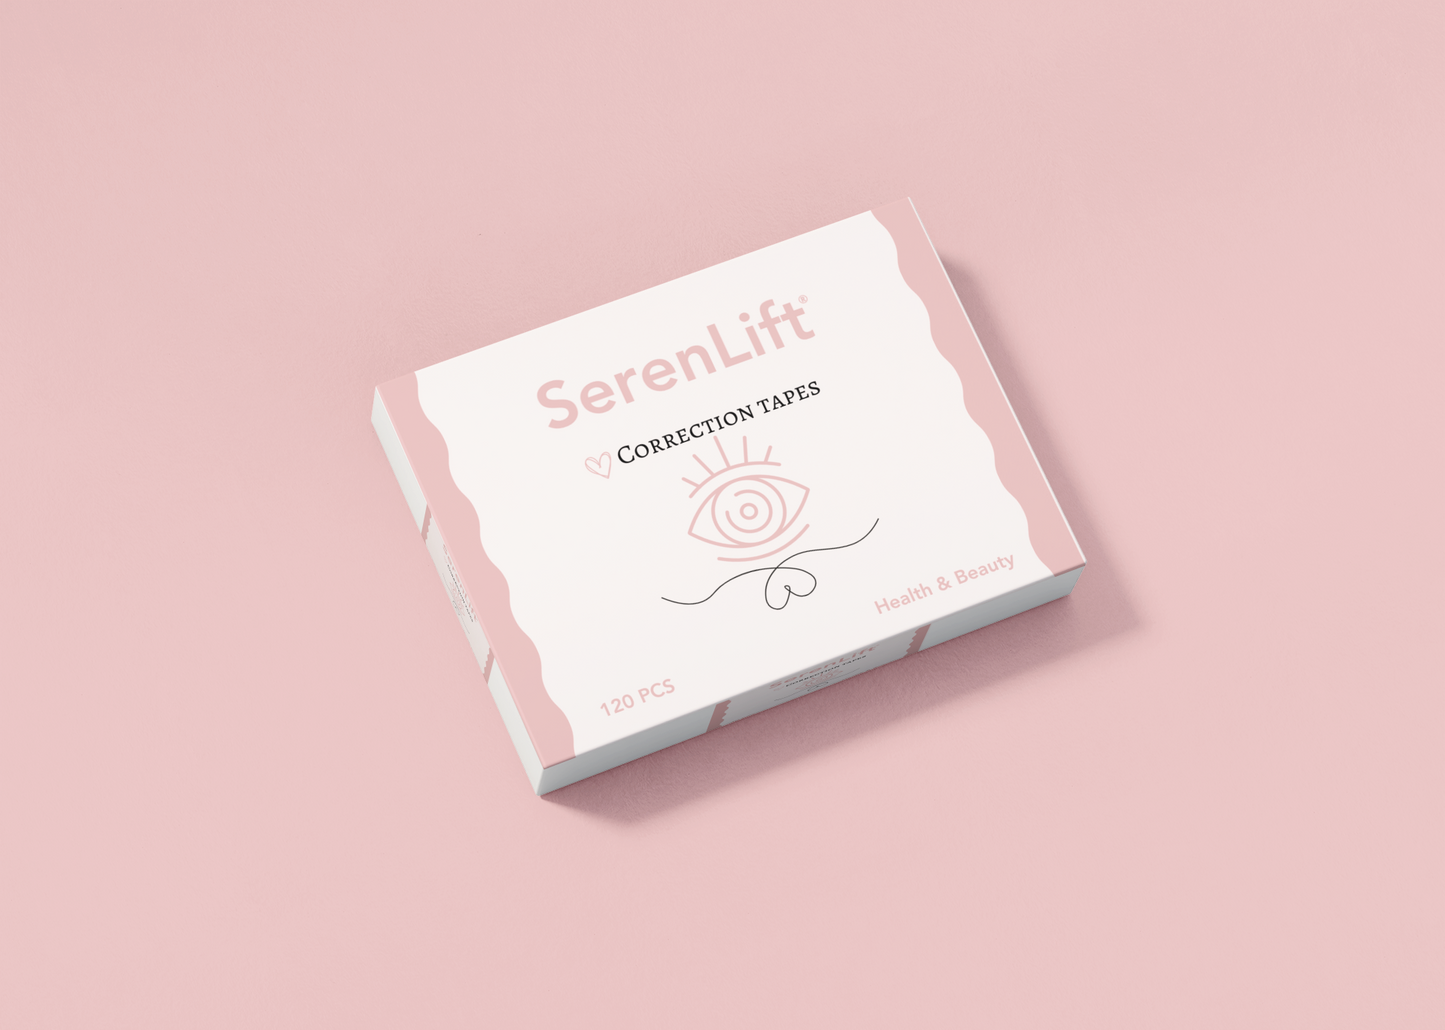 SerenLift: Redefining Beauty.